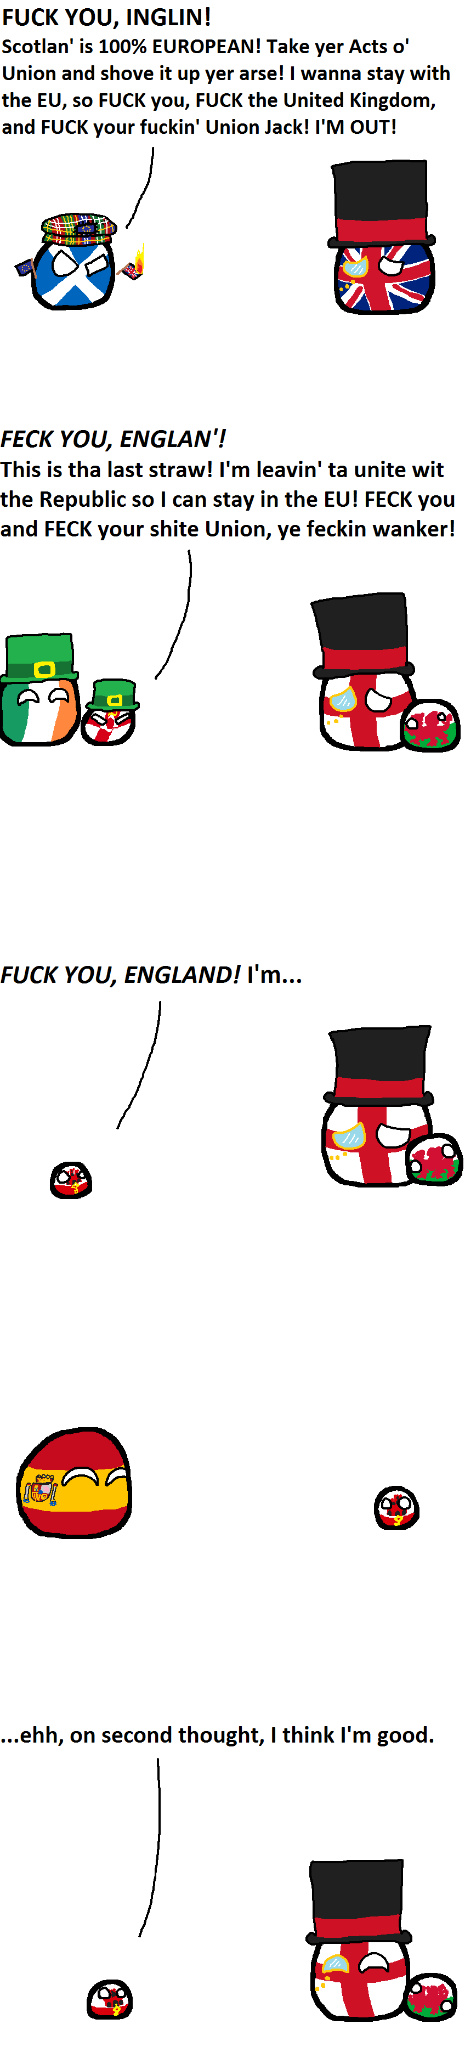 Fuck you England - meme